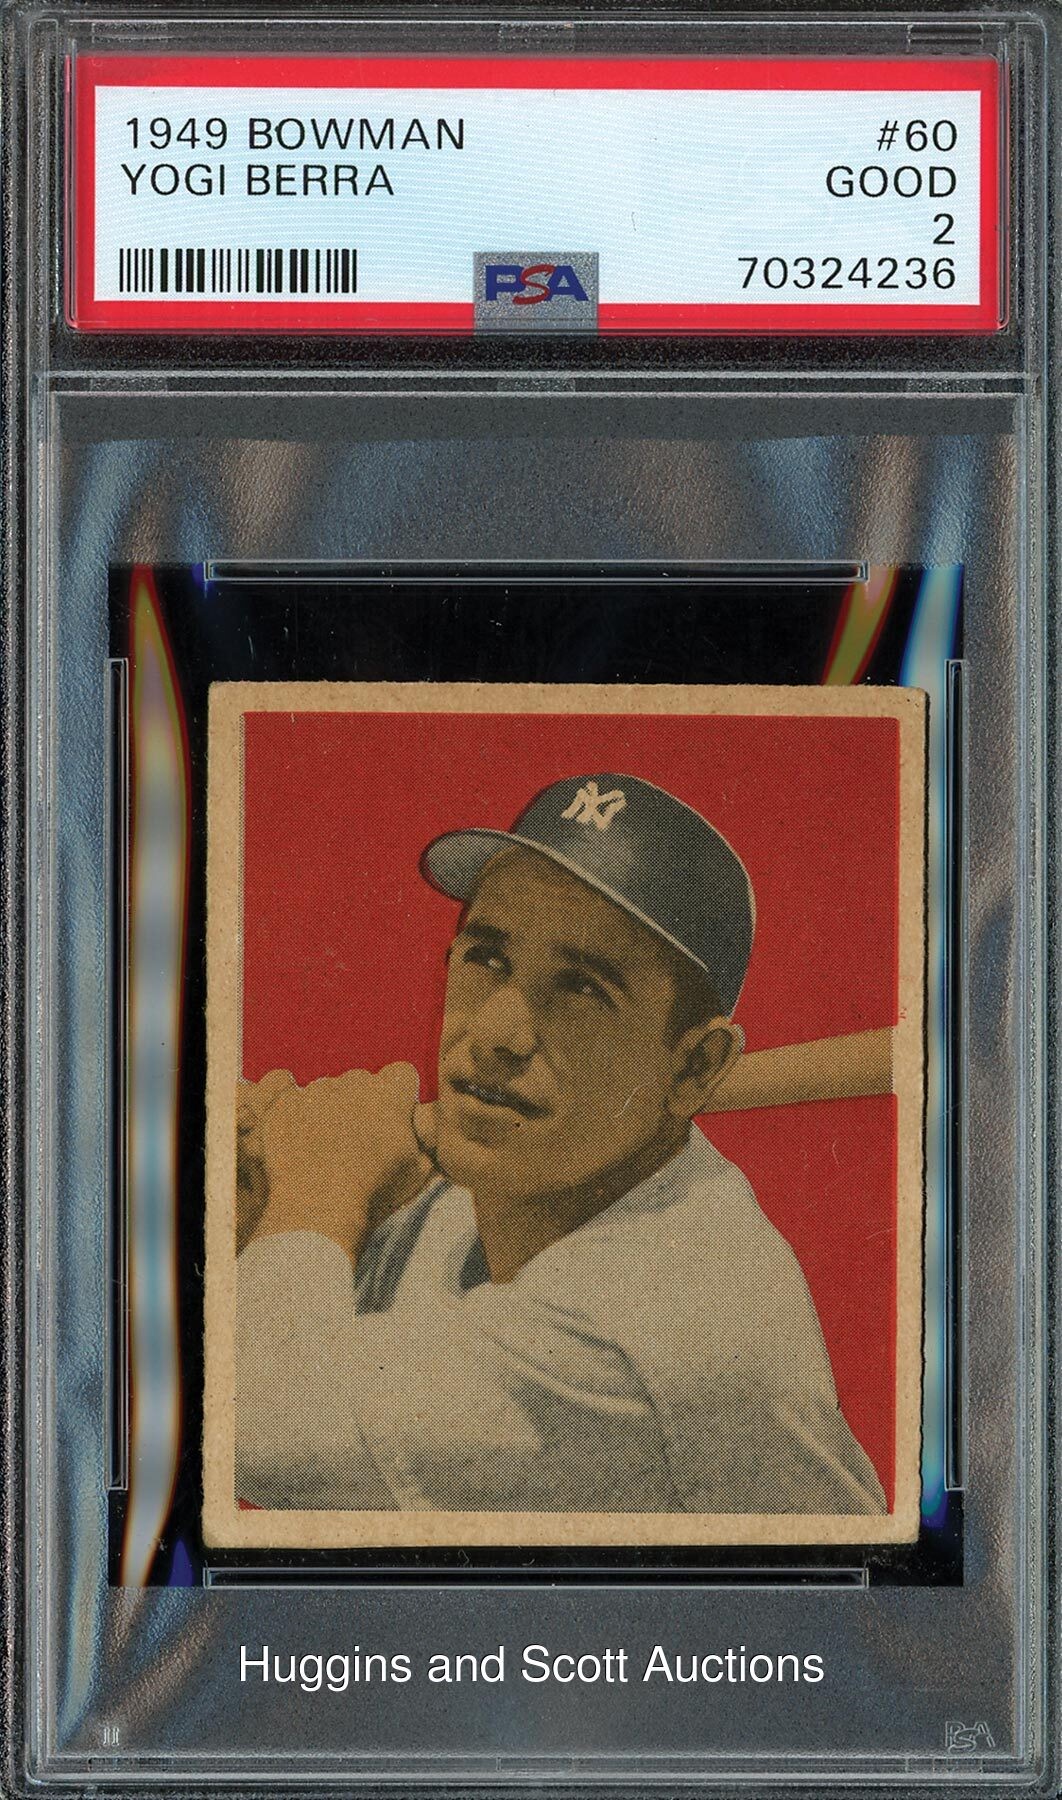 1949 Bowman Baseball #60 Yogi Berra - PSA Good 2